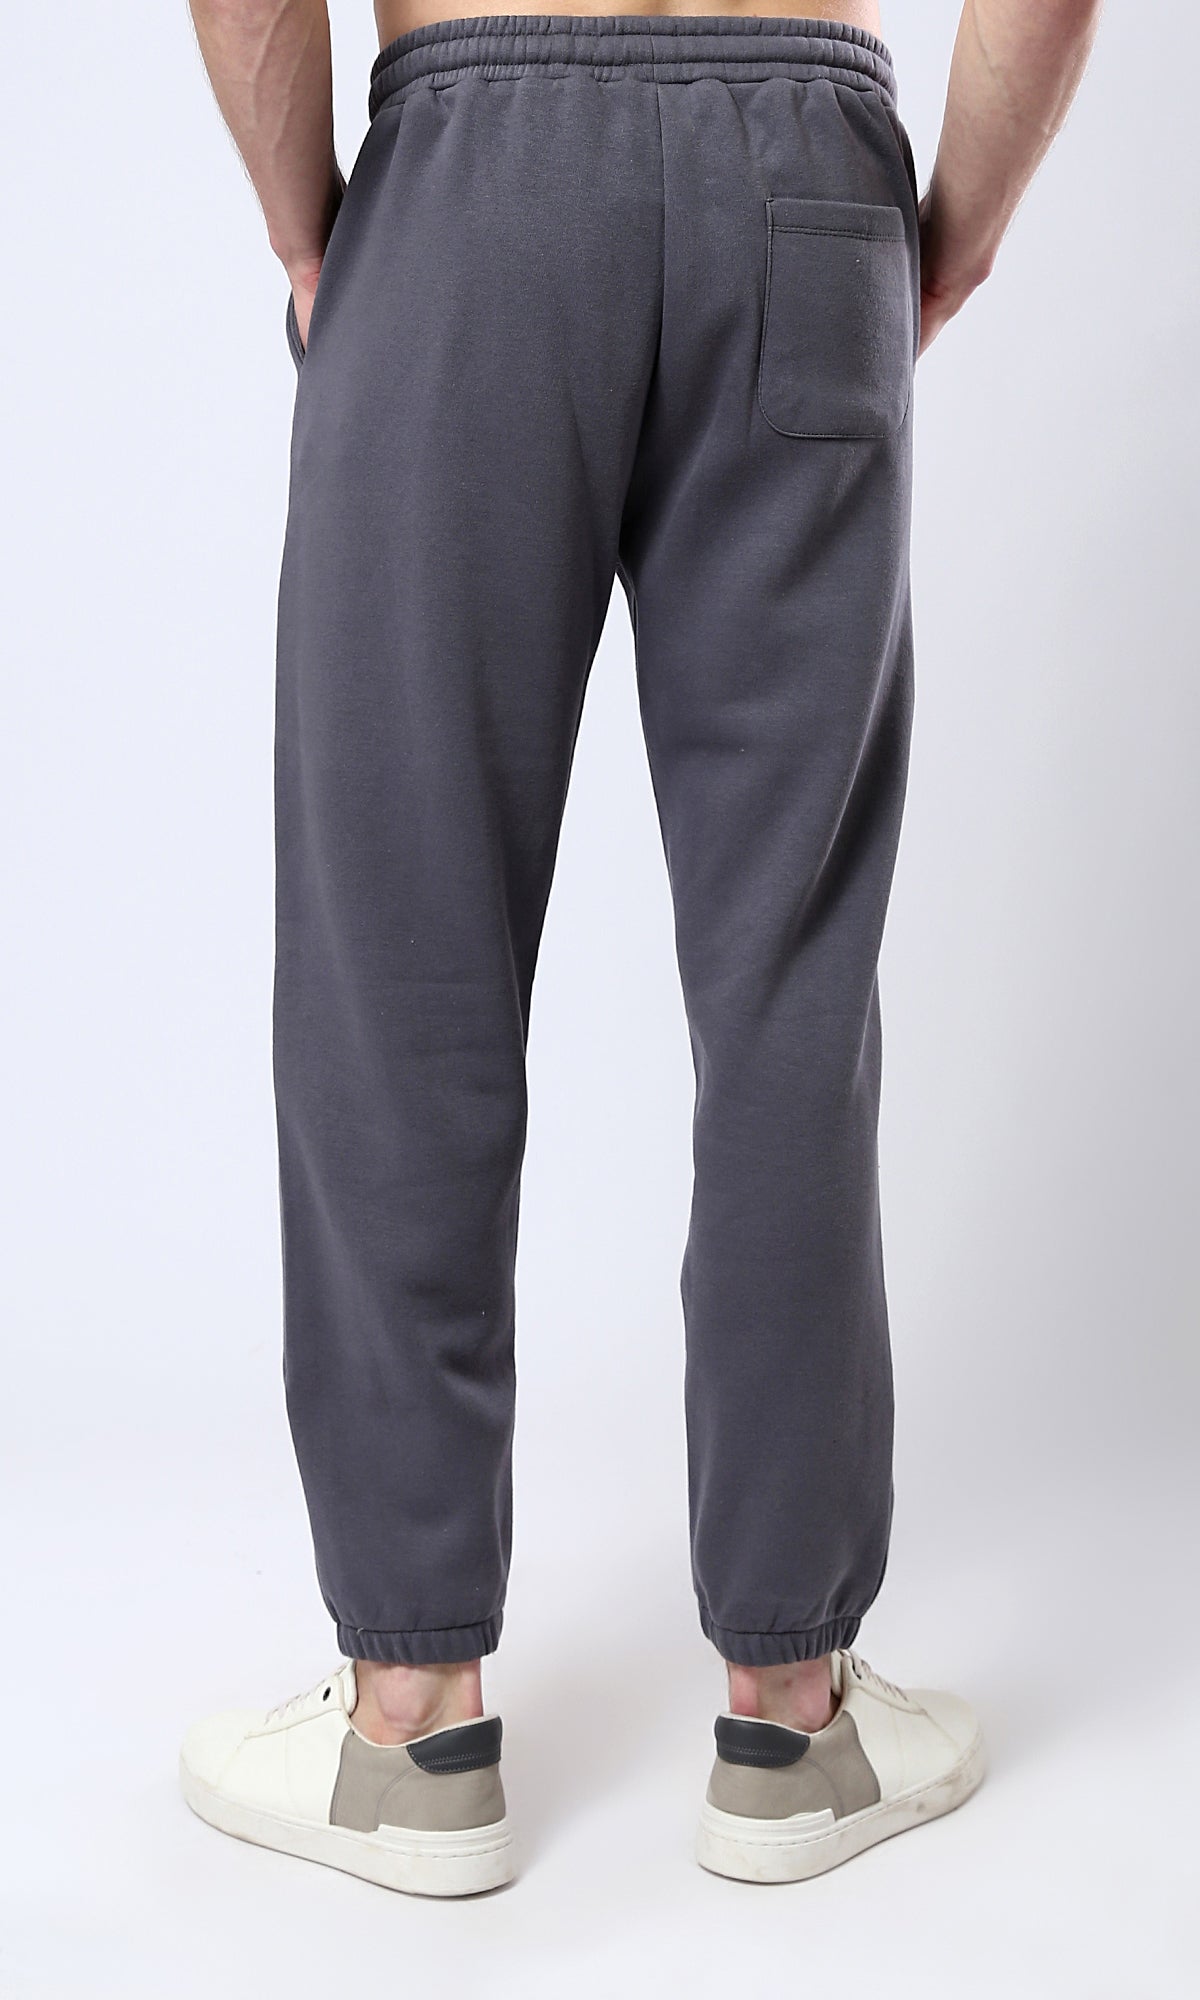 O178902 Dark Grey Regular Fit Jogger Pants With Pockets